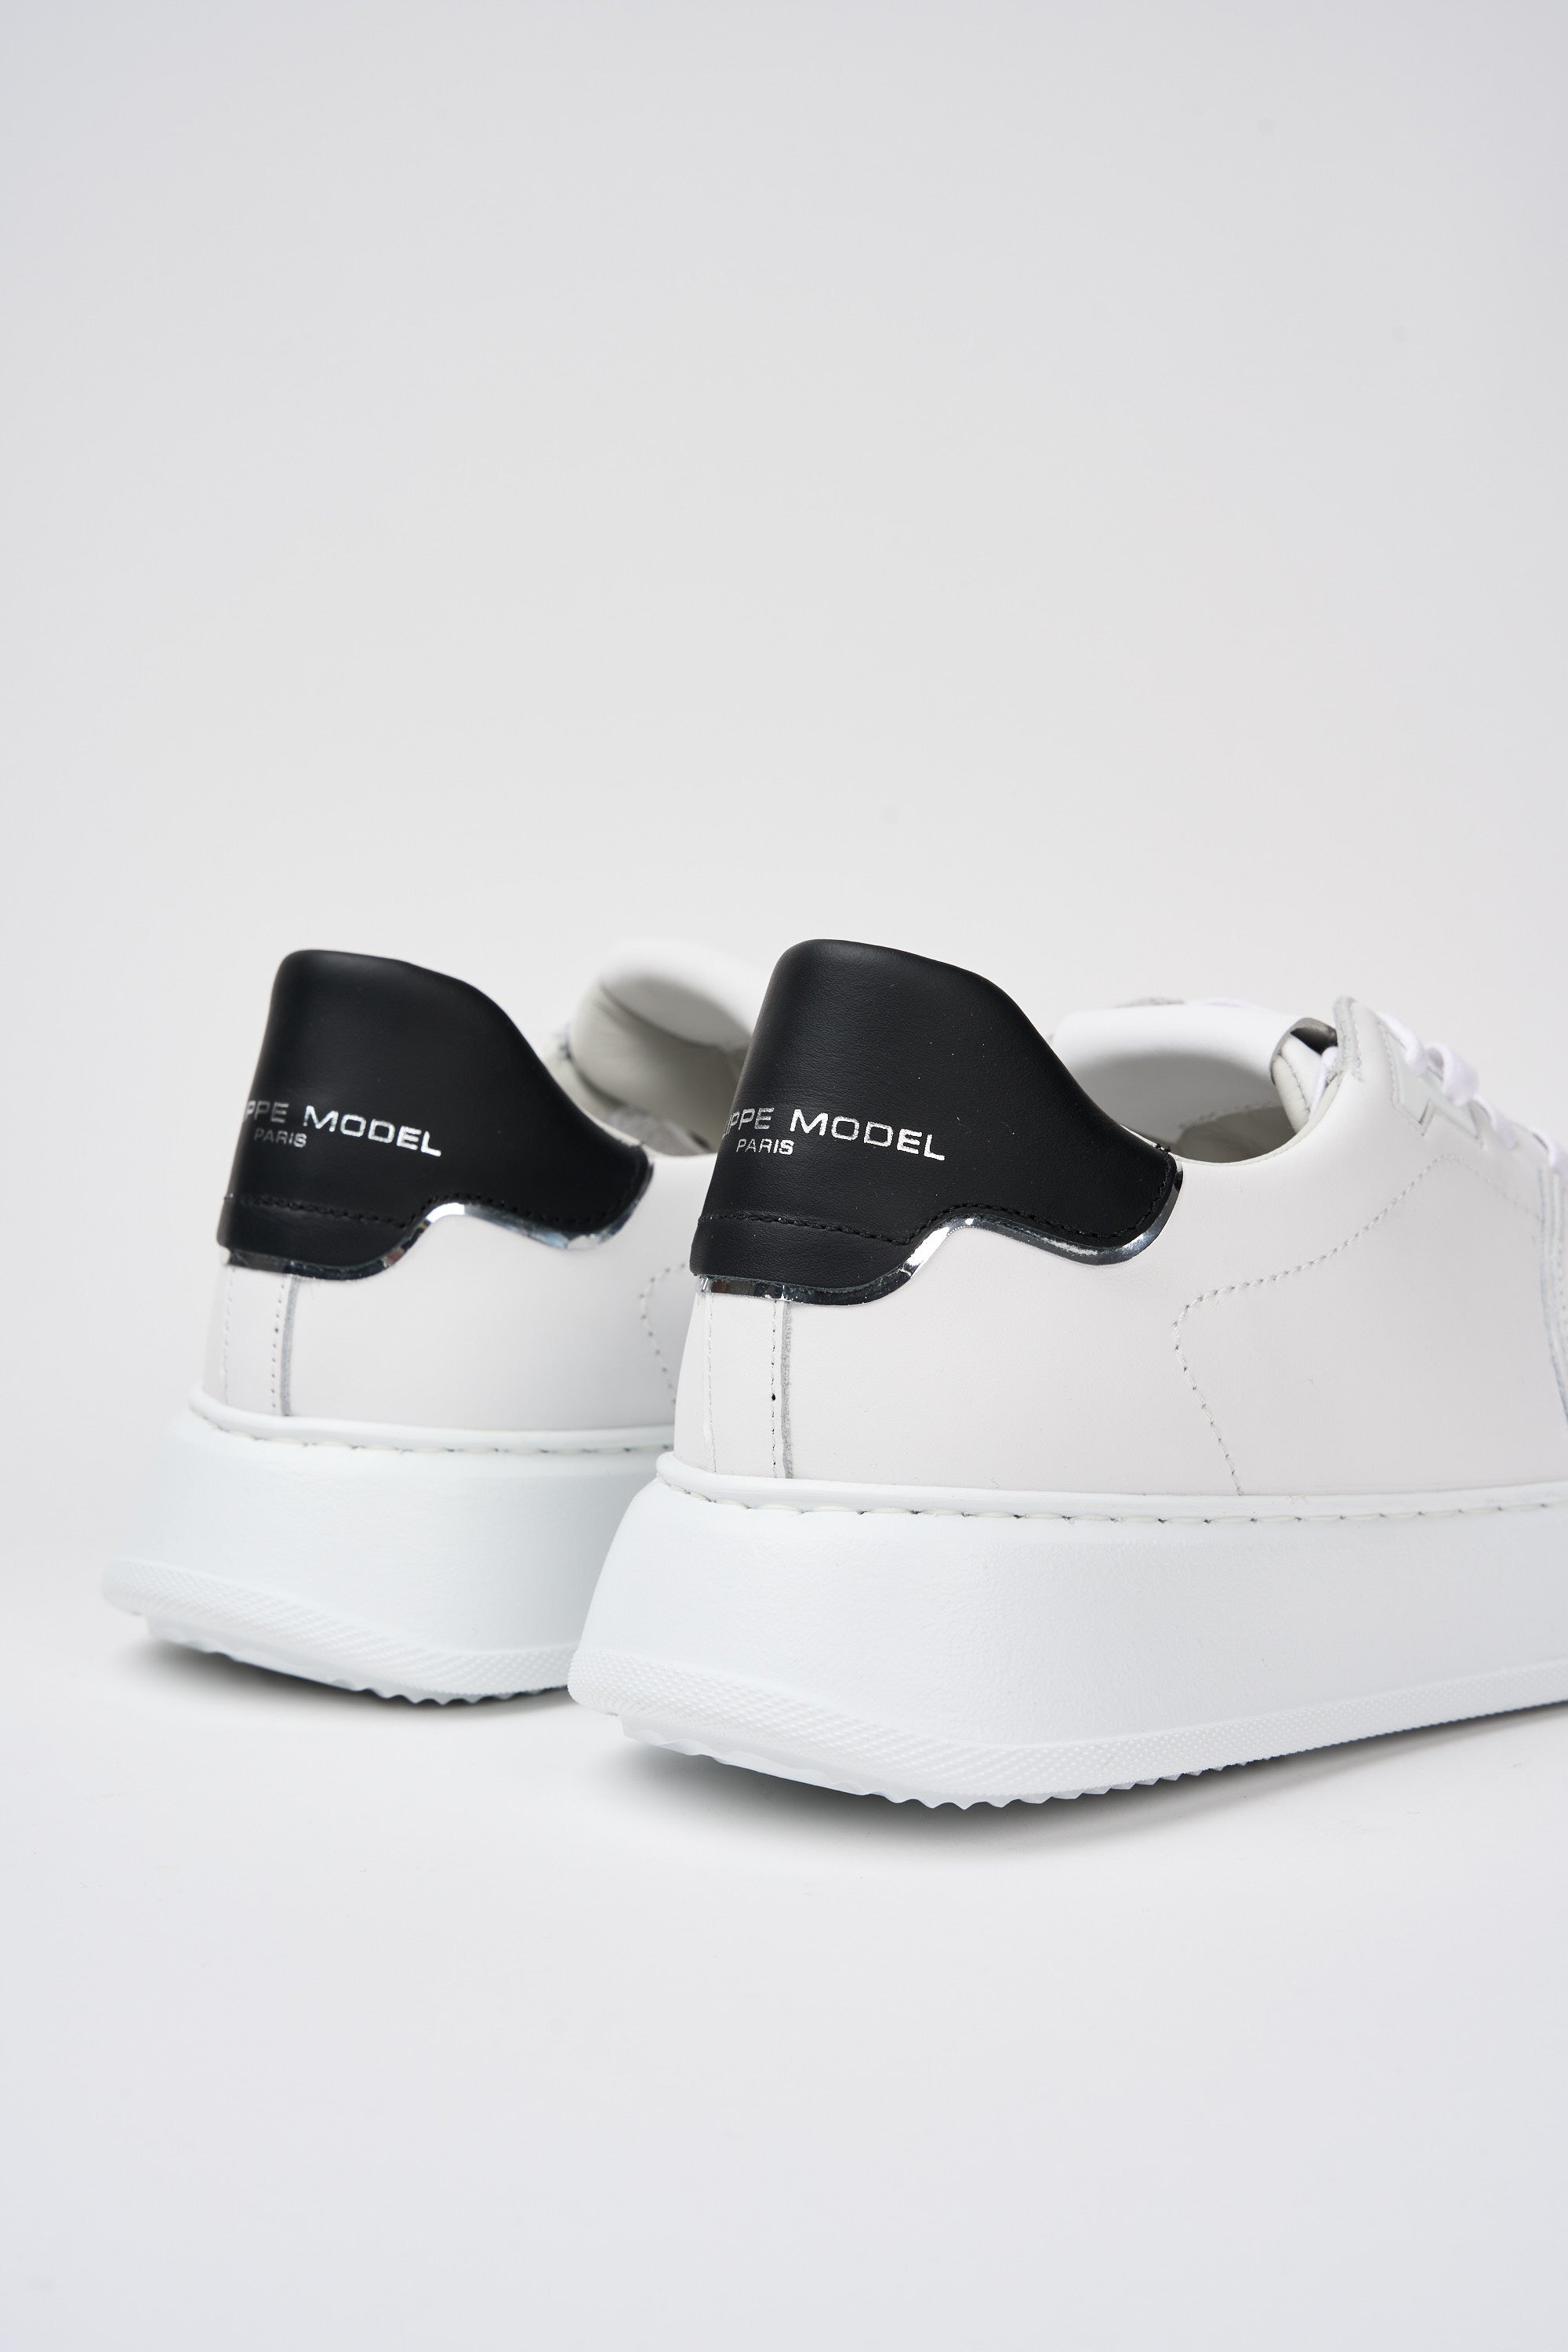 Philippe Model Sneaker Temple Leather White/Black-6